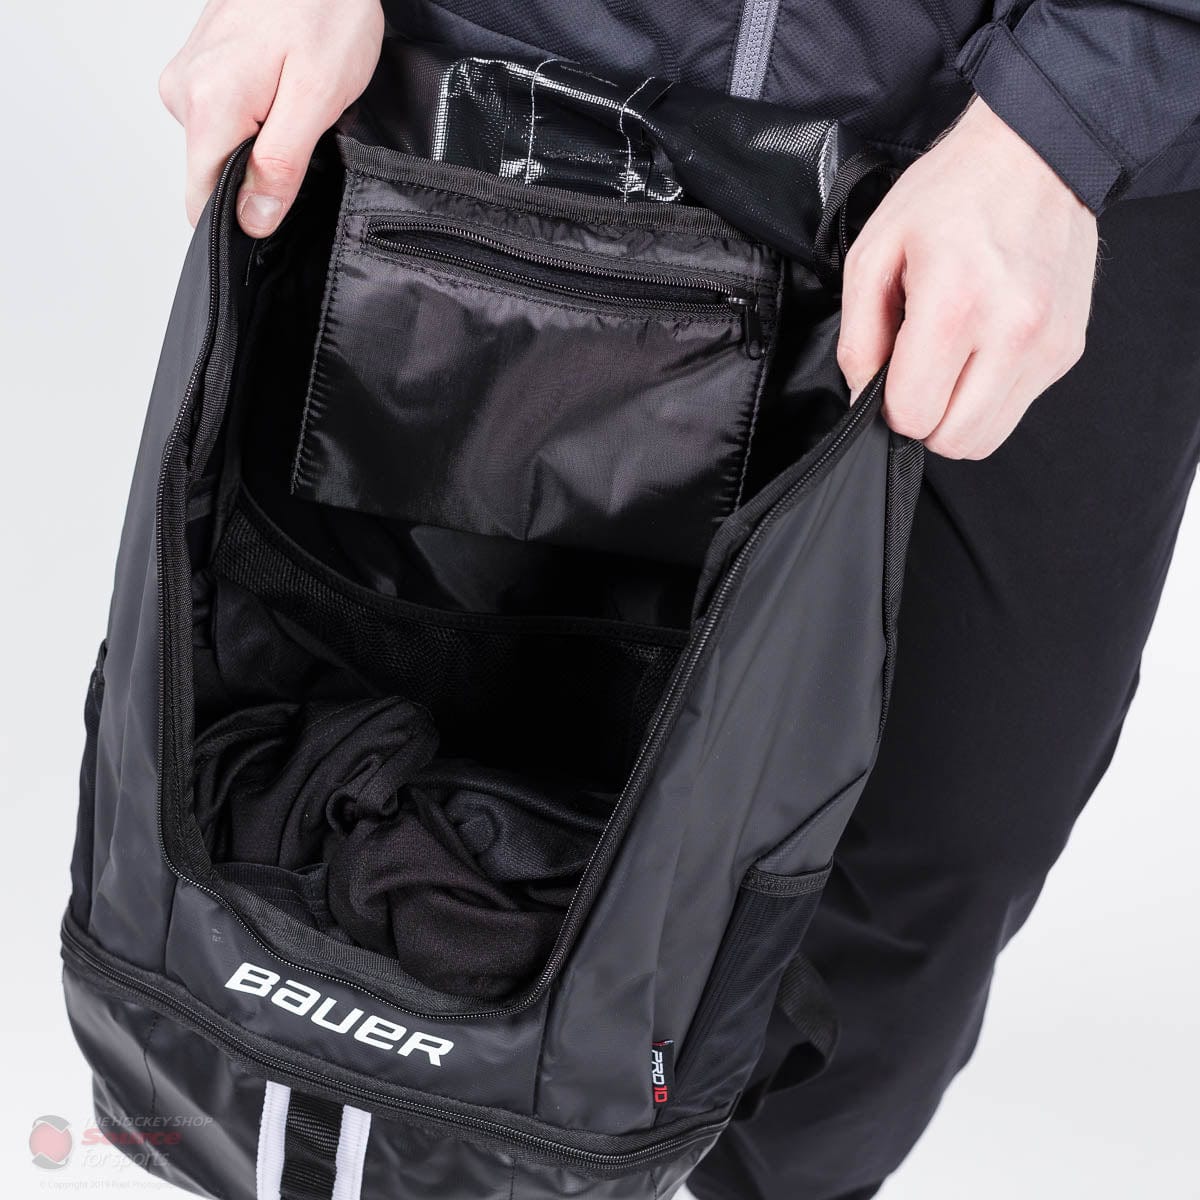 Bauer Pro 10 Backpack